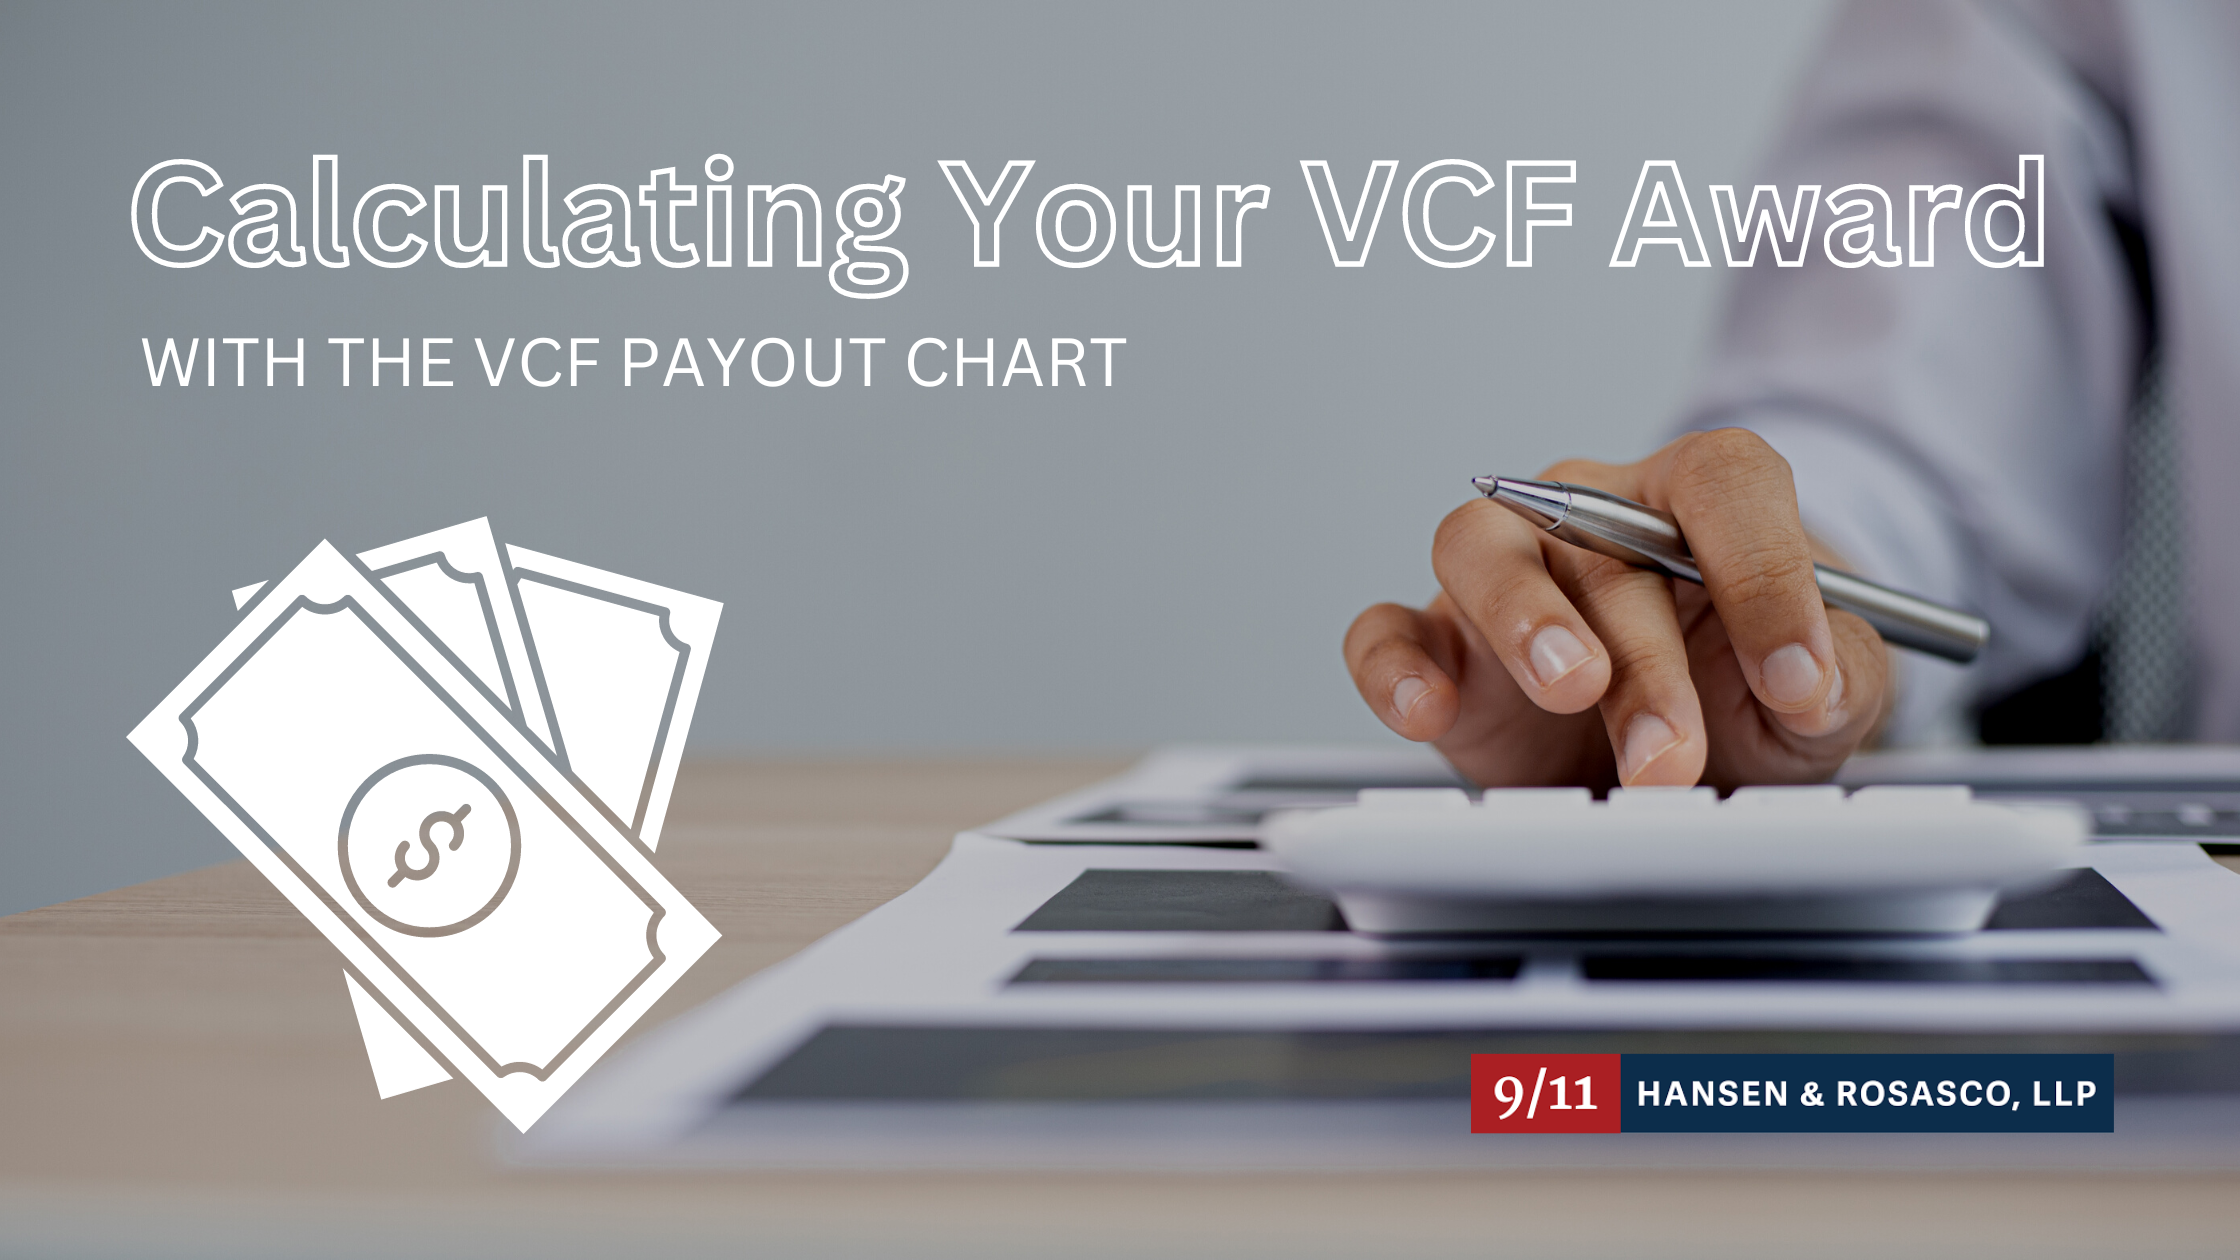 VCF Payout Chart Awards